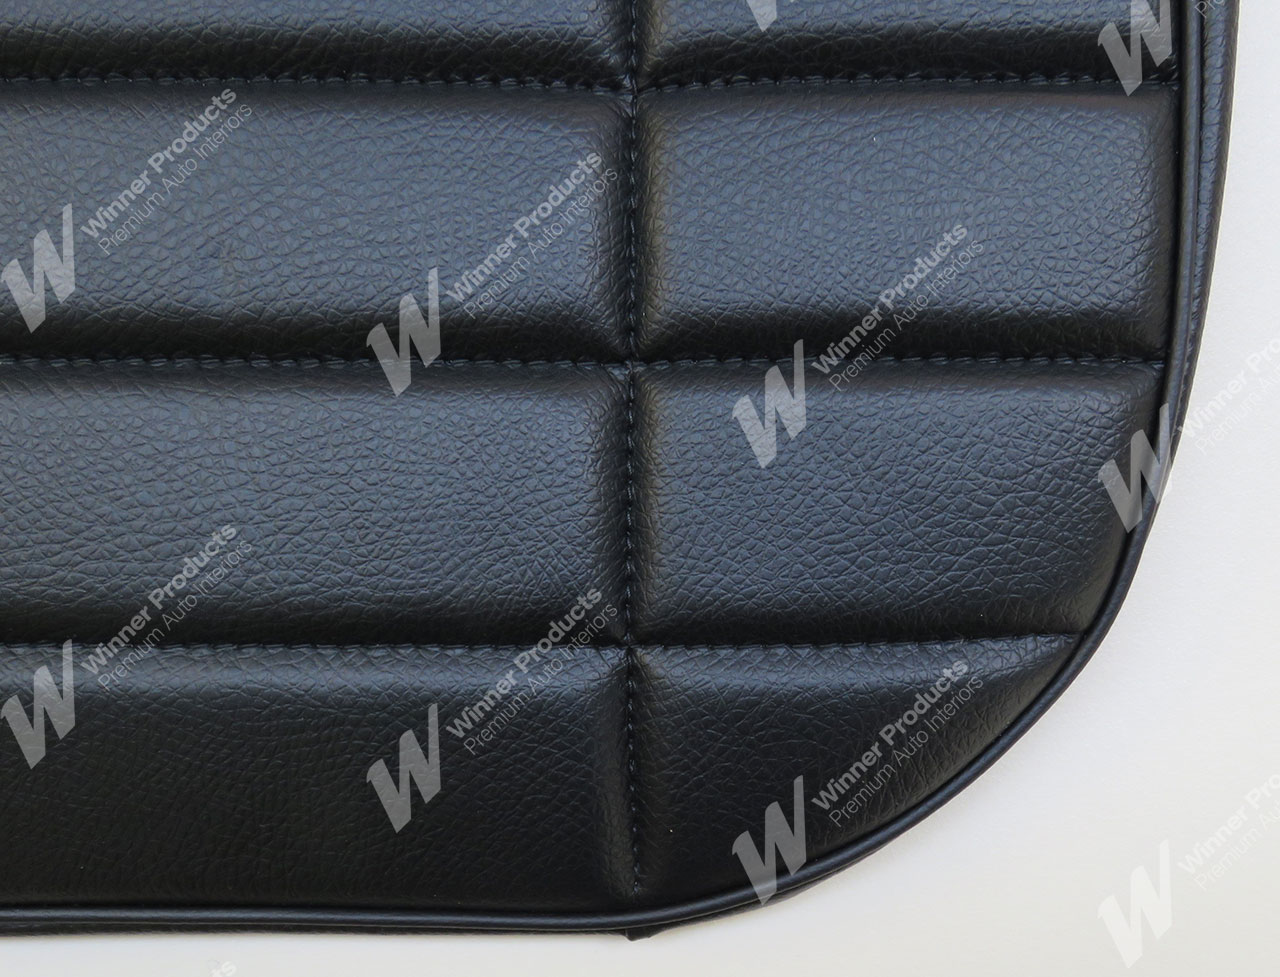 Holden Torana LC Torana XU1 Coupe 40V Black Seat Covers (Image 4 of 4)